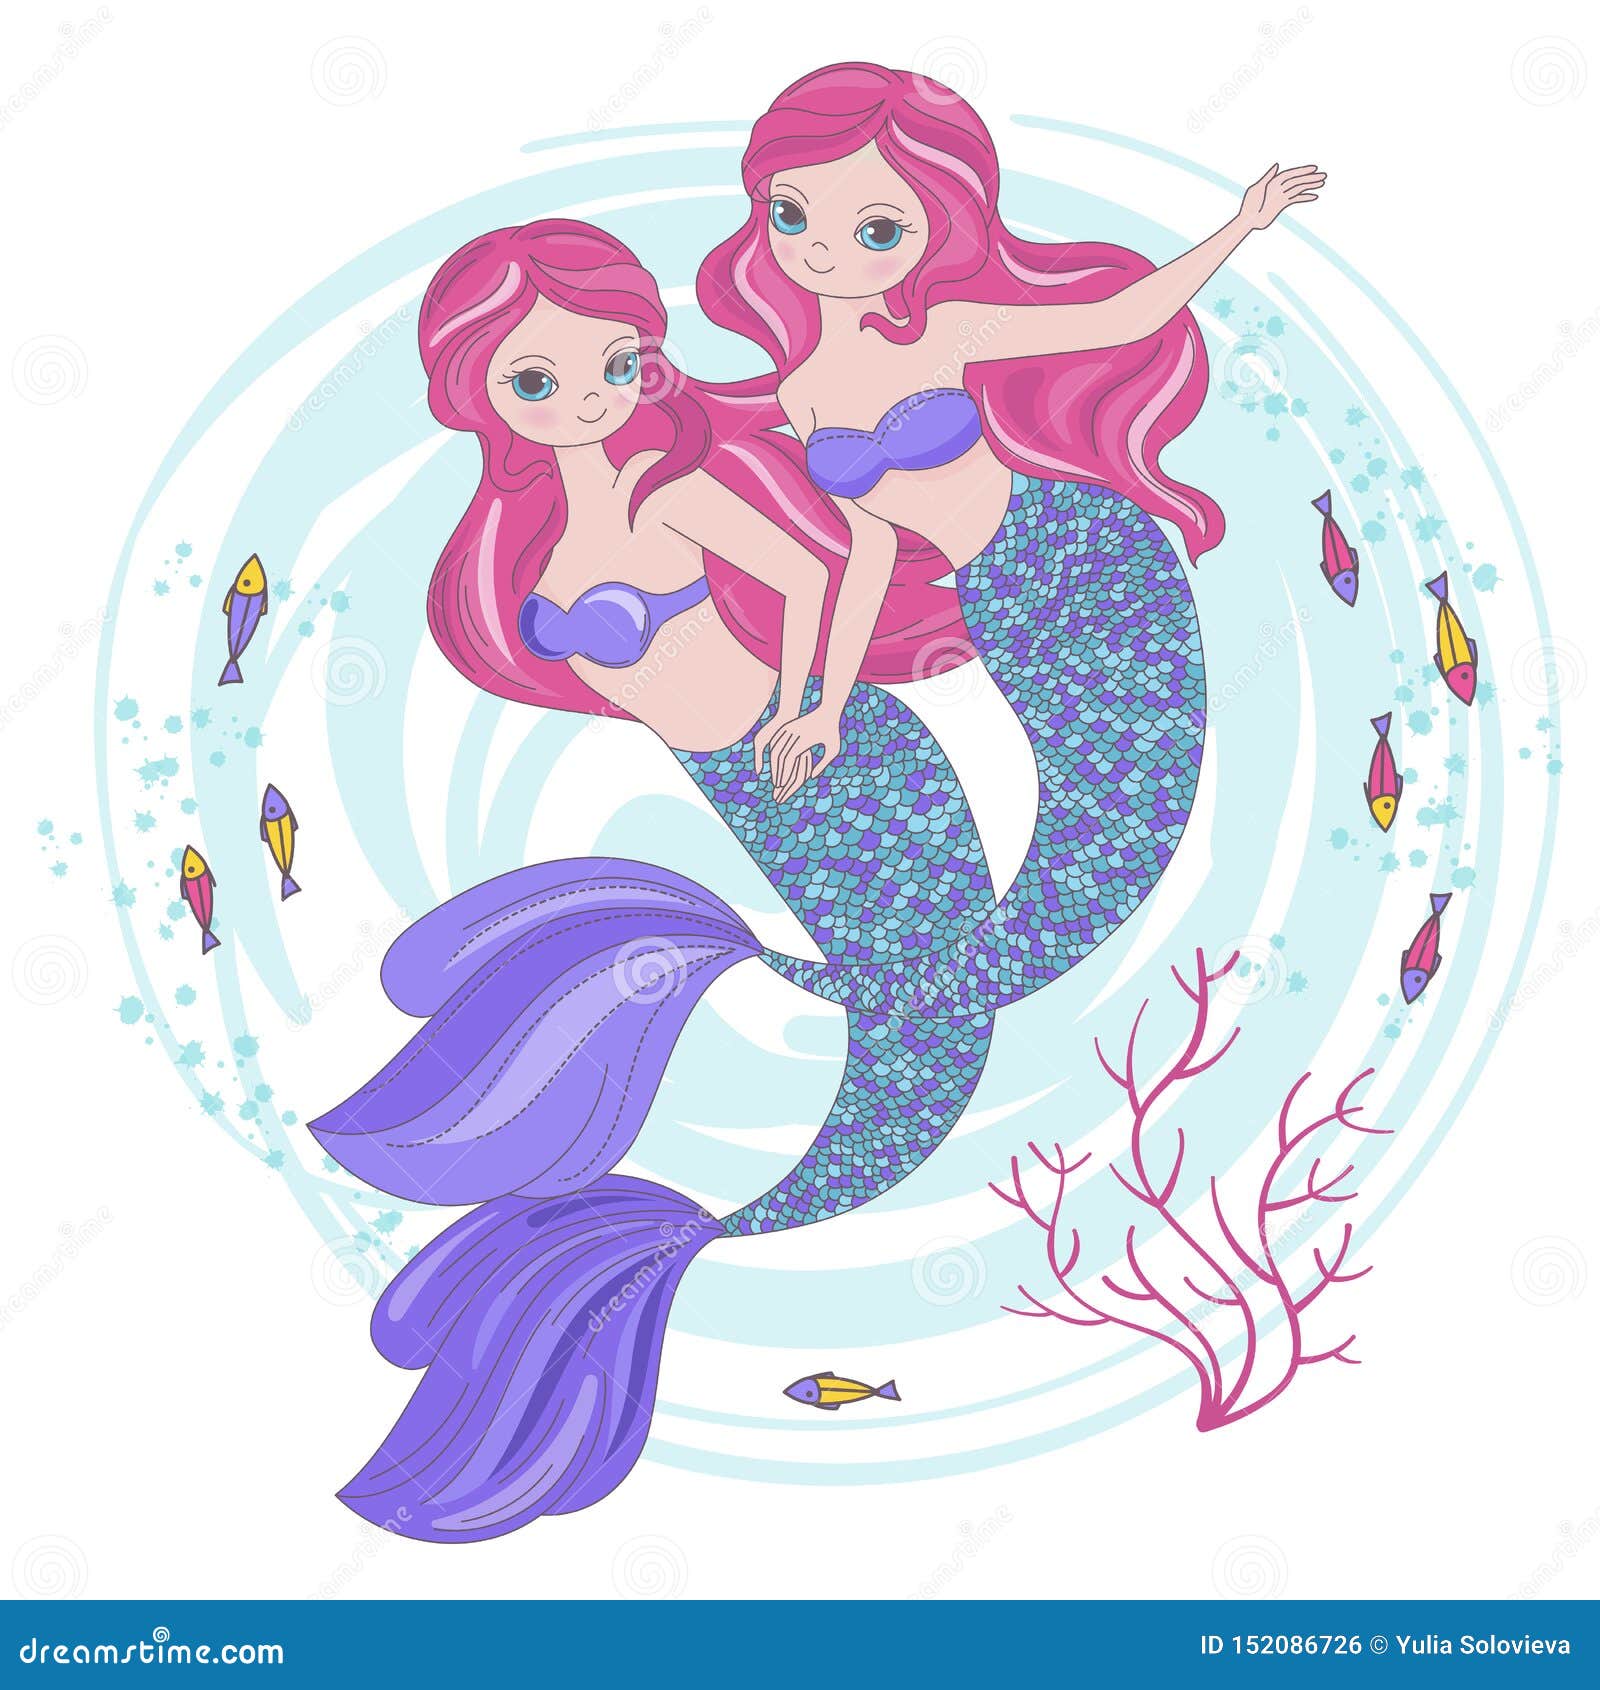 366 Mermaid Cartoon Stock Photos - Free & Royalty-Free Stock Photos from  Dreamstime